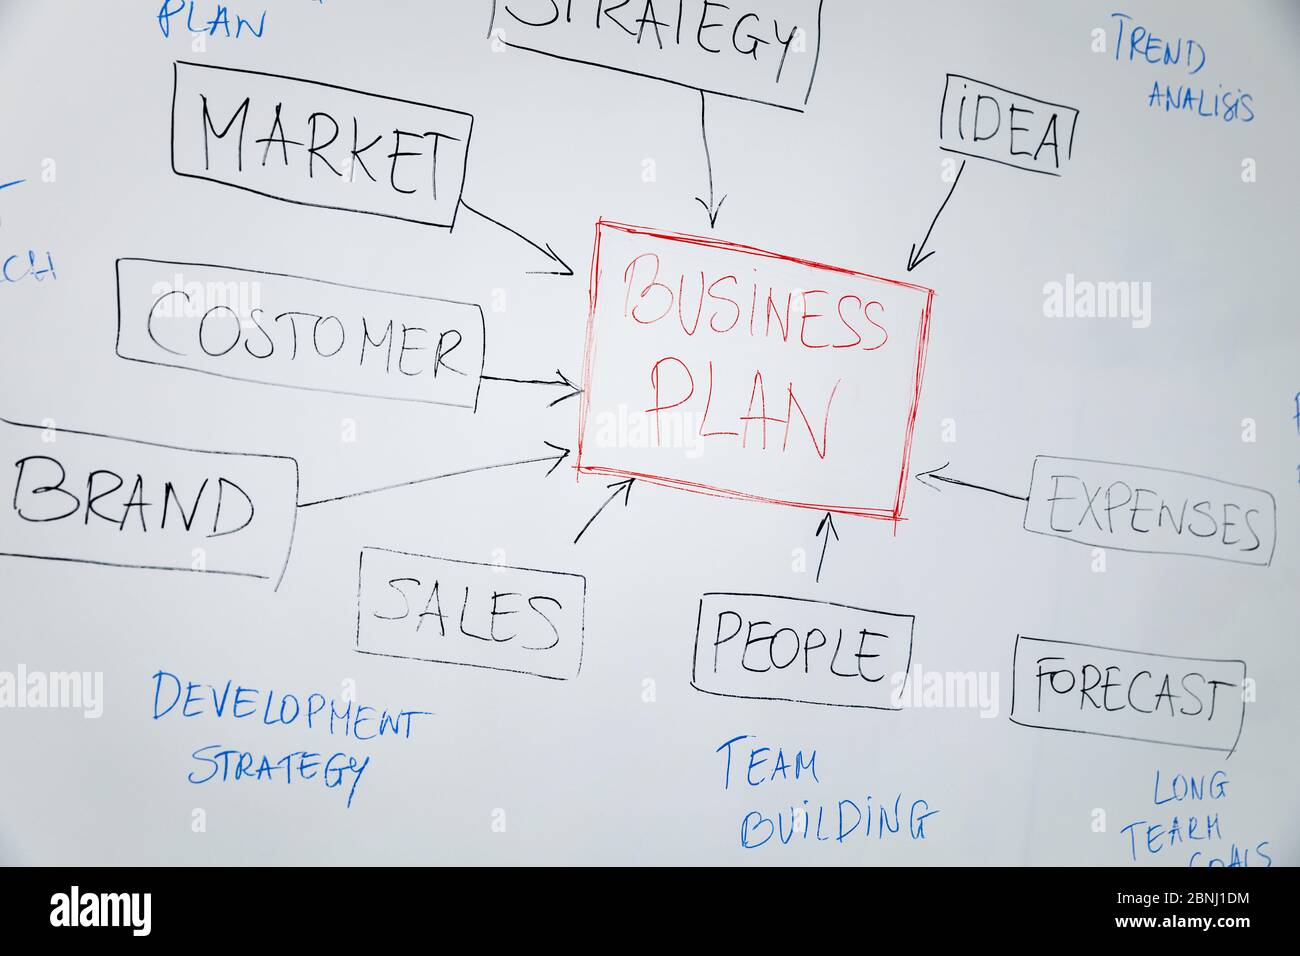 business plan block diagram on whiteboard Stock Photo